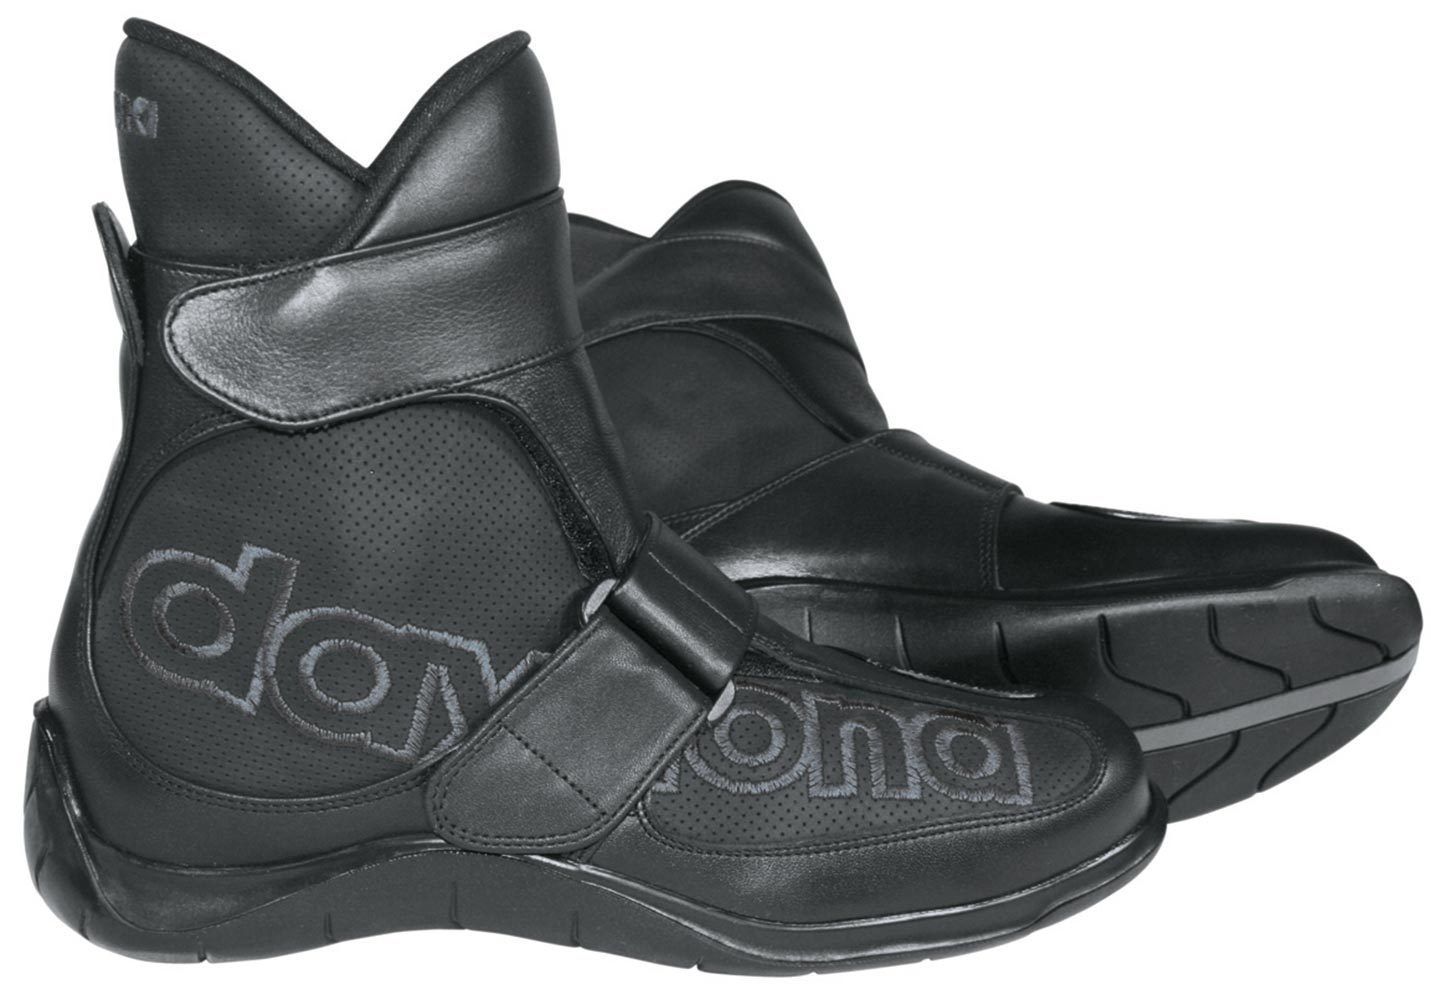 Daytona Shorty Motorradschuhe, schwarz, Größe 39